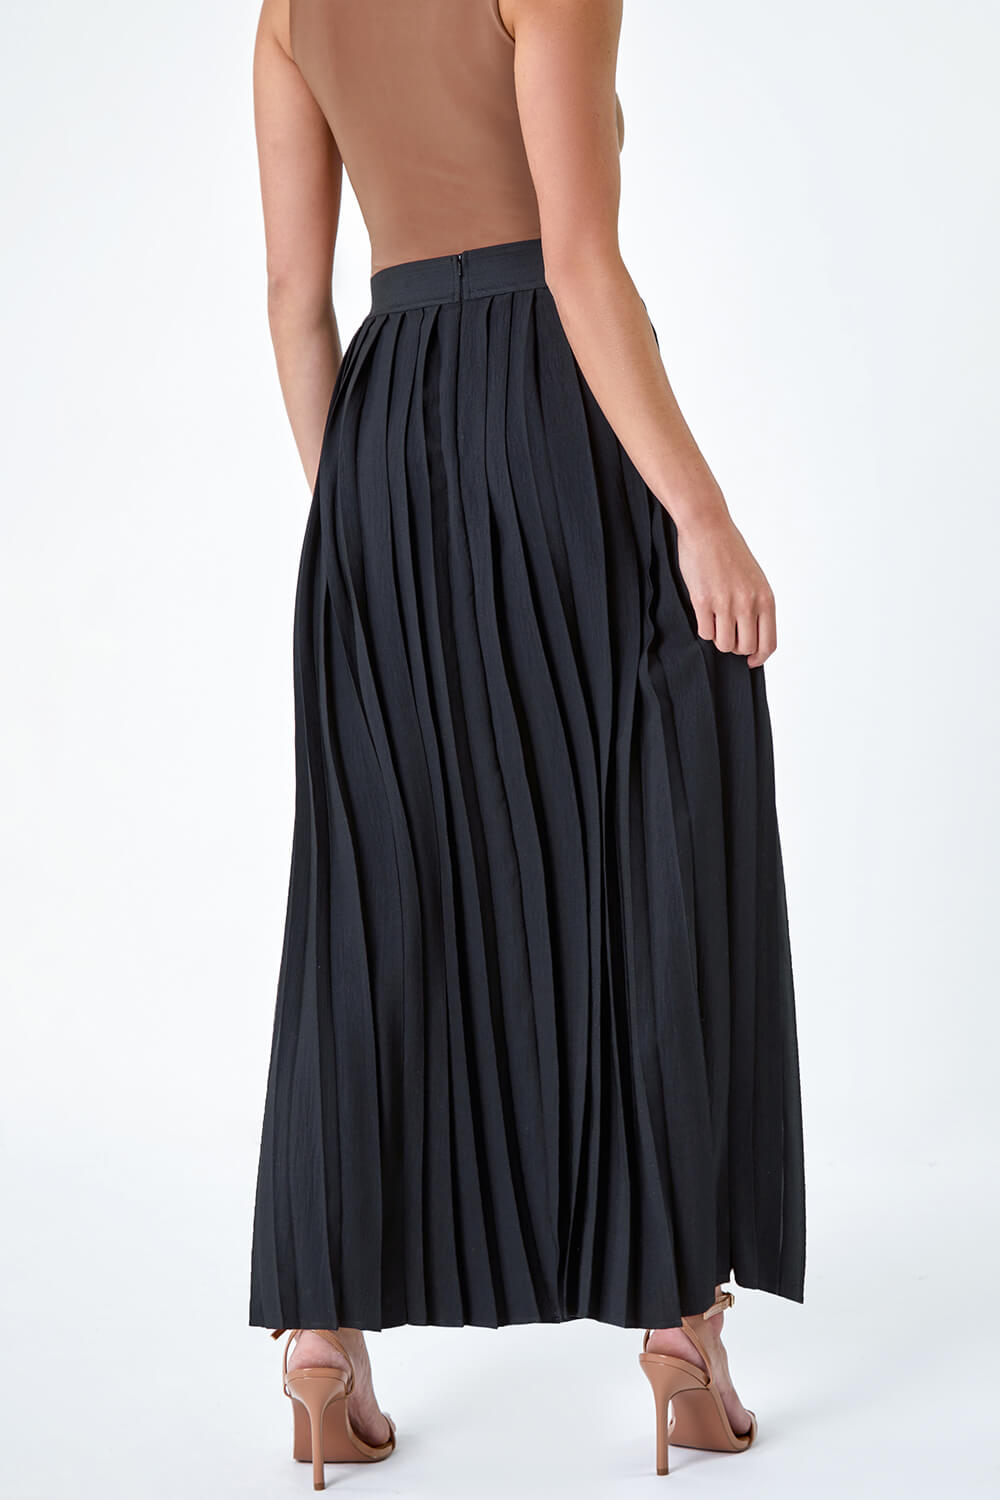 Black Petite Plain Pleated Maxi Skirt, Image 3 of 5